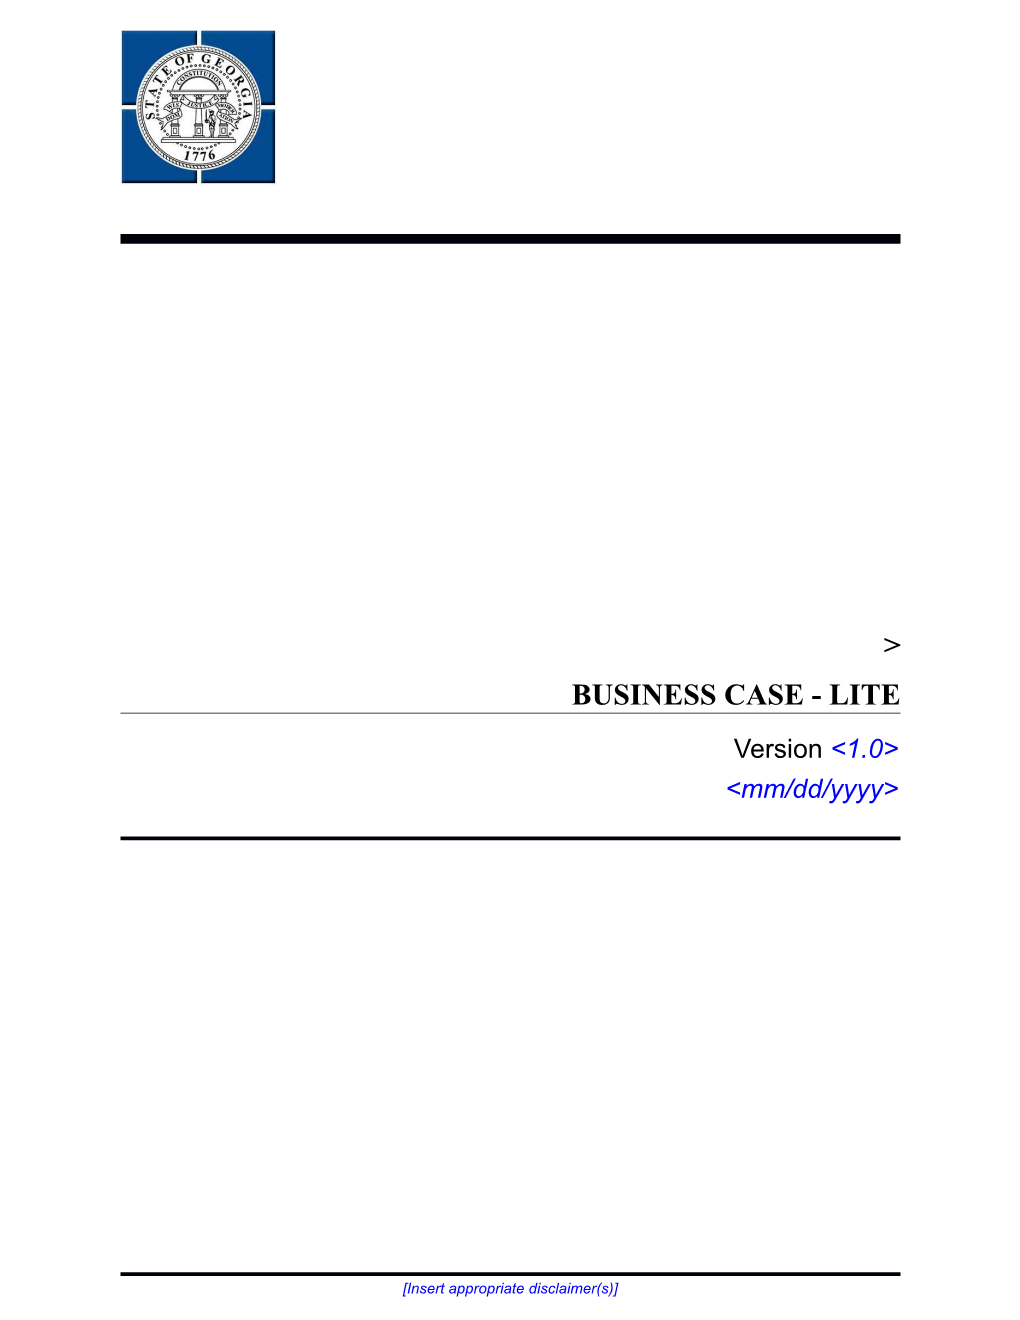 Business Case - LITE